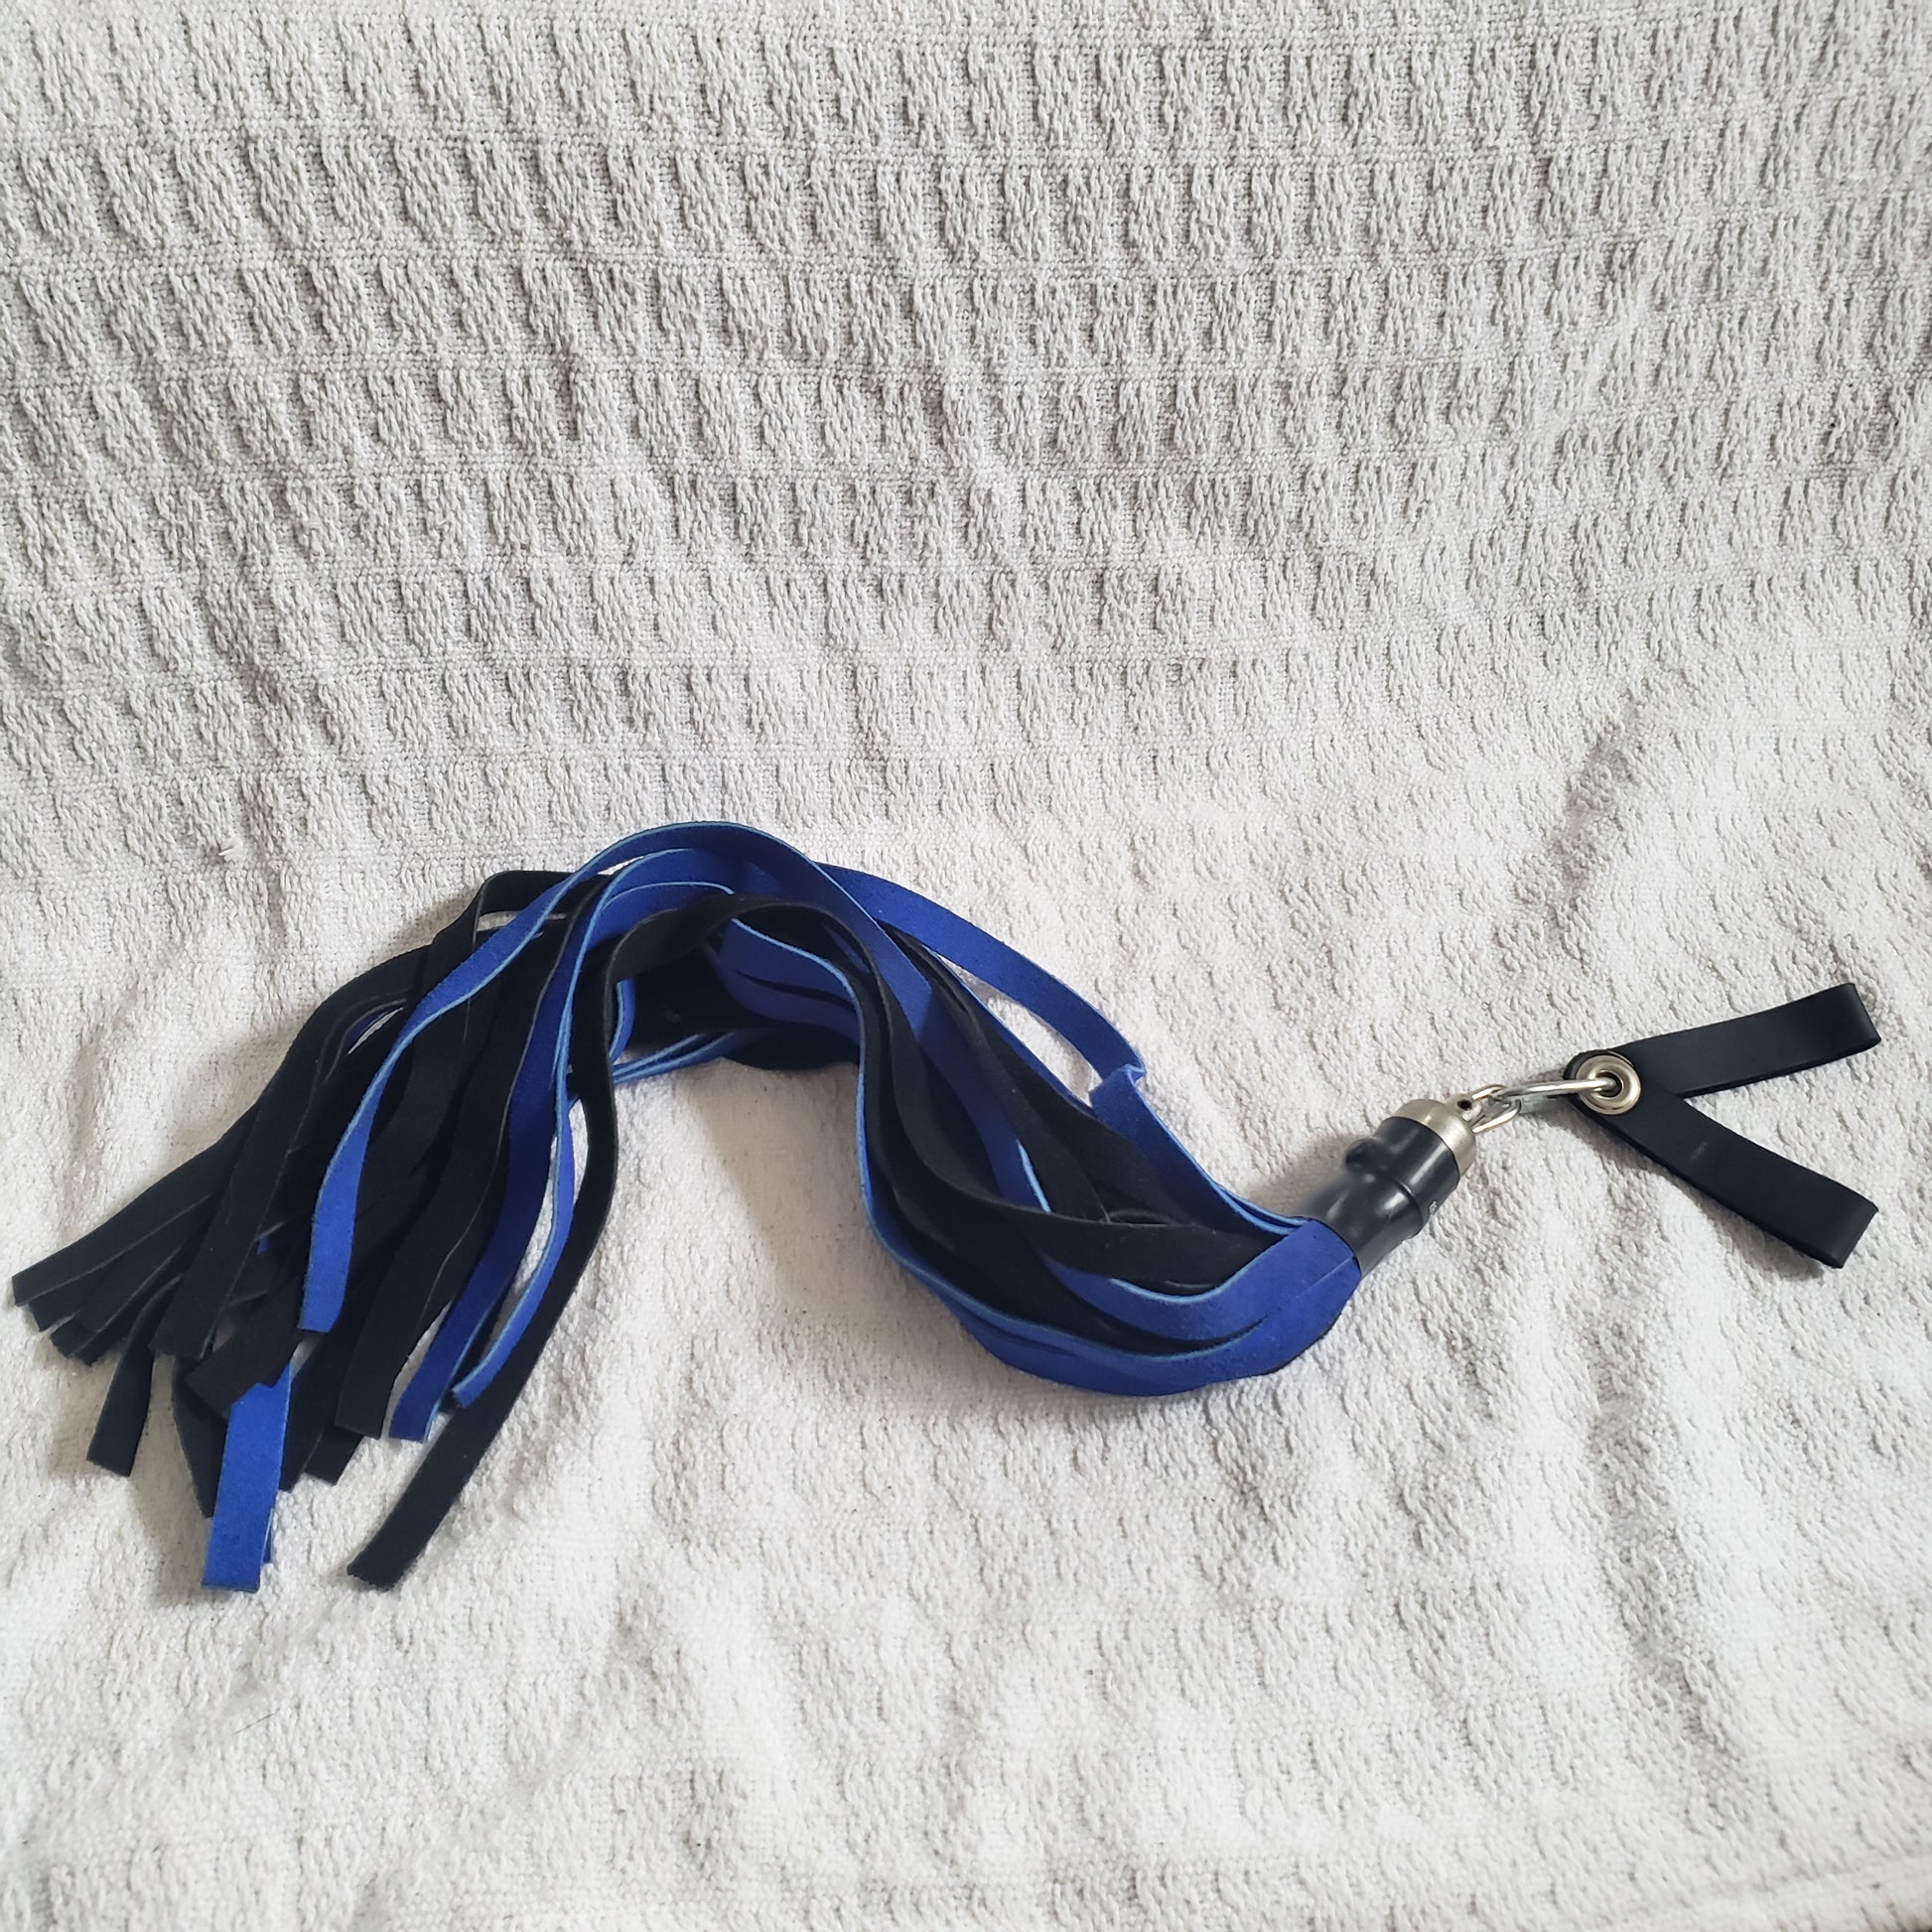 The blue and black suede finger loop flogger.